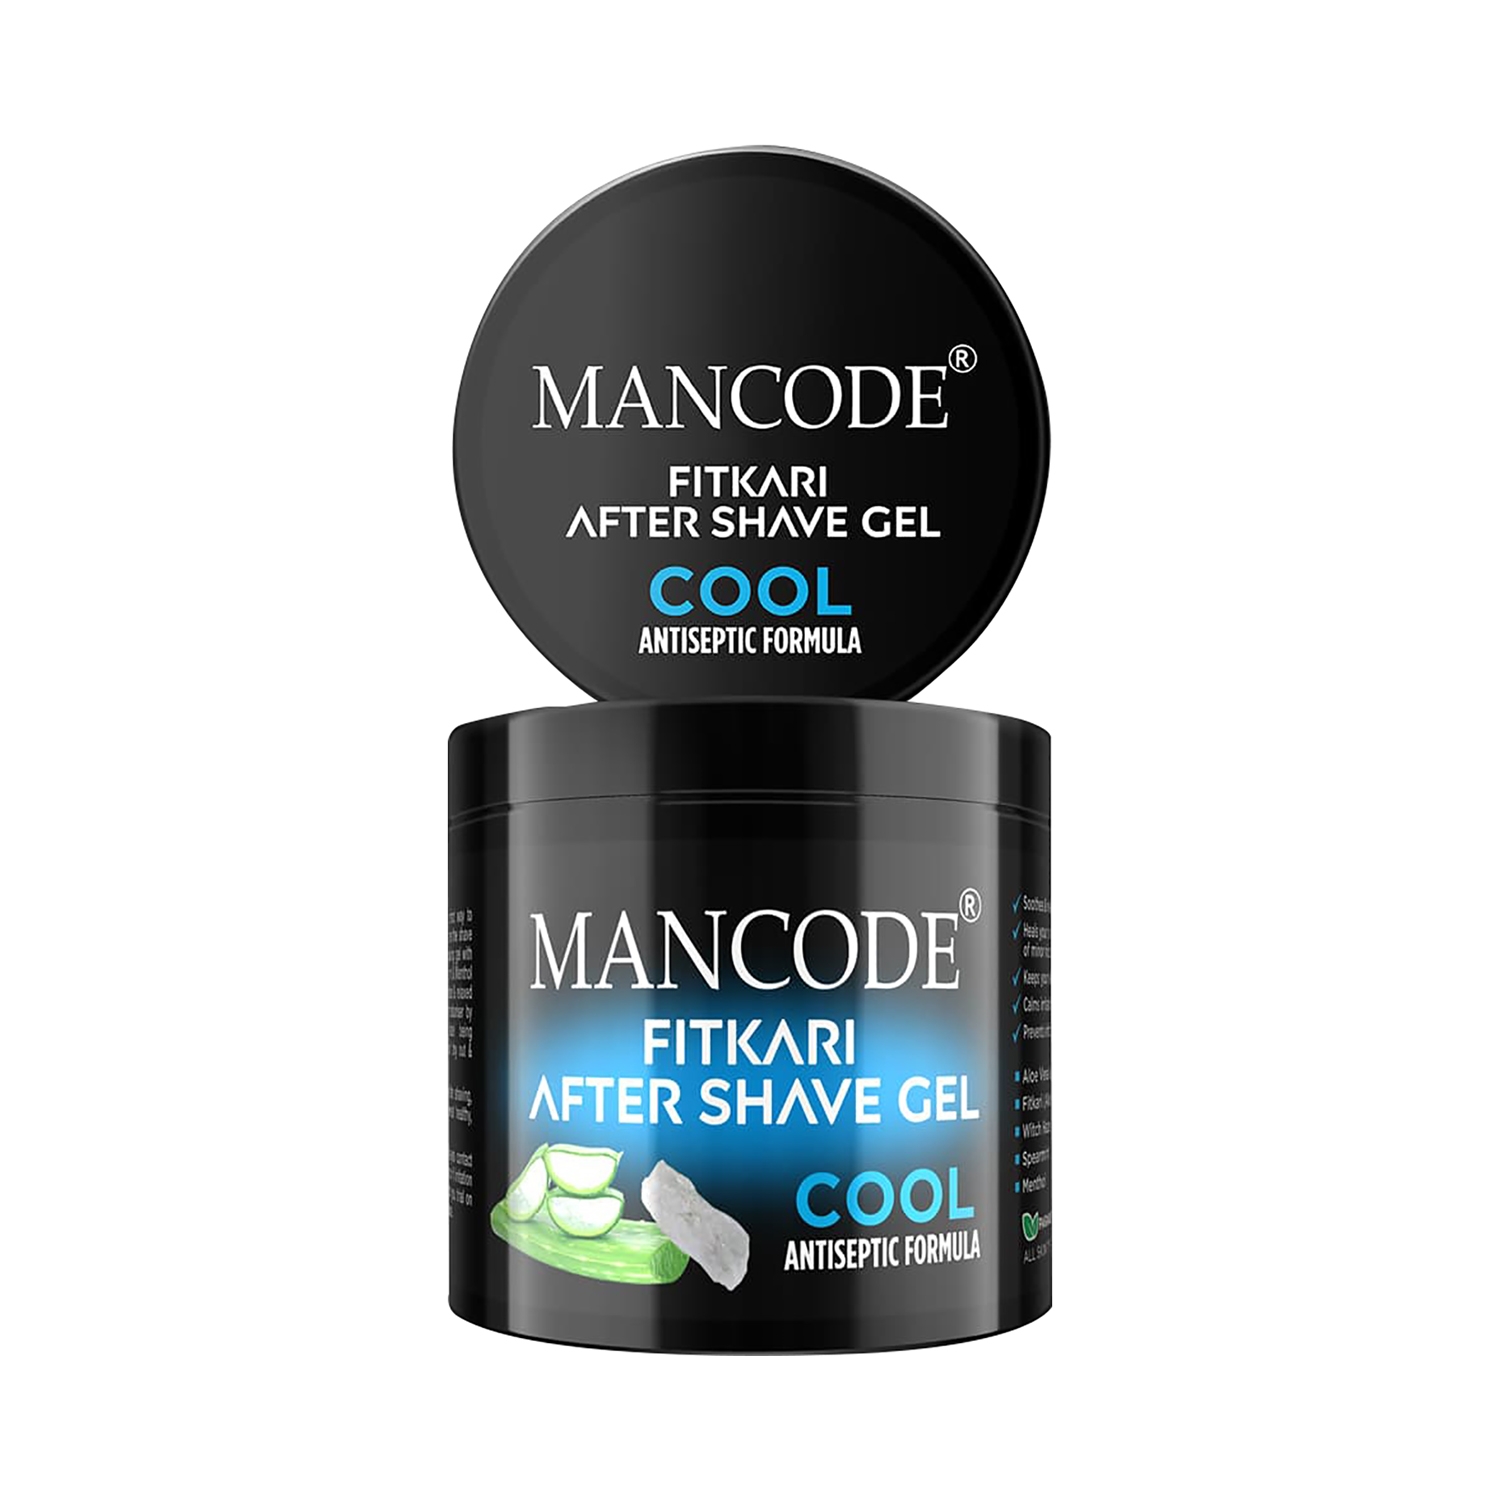 Mancode | Mancode Fitkari After Shave Gel (100g)